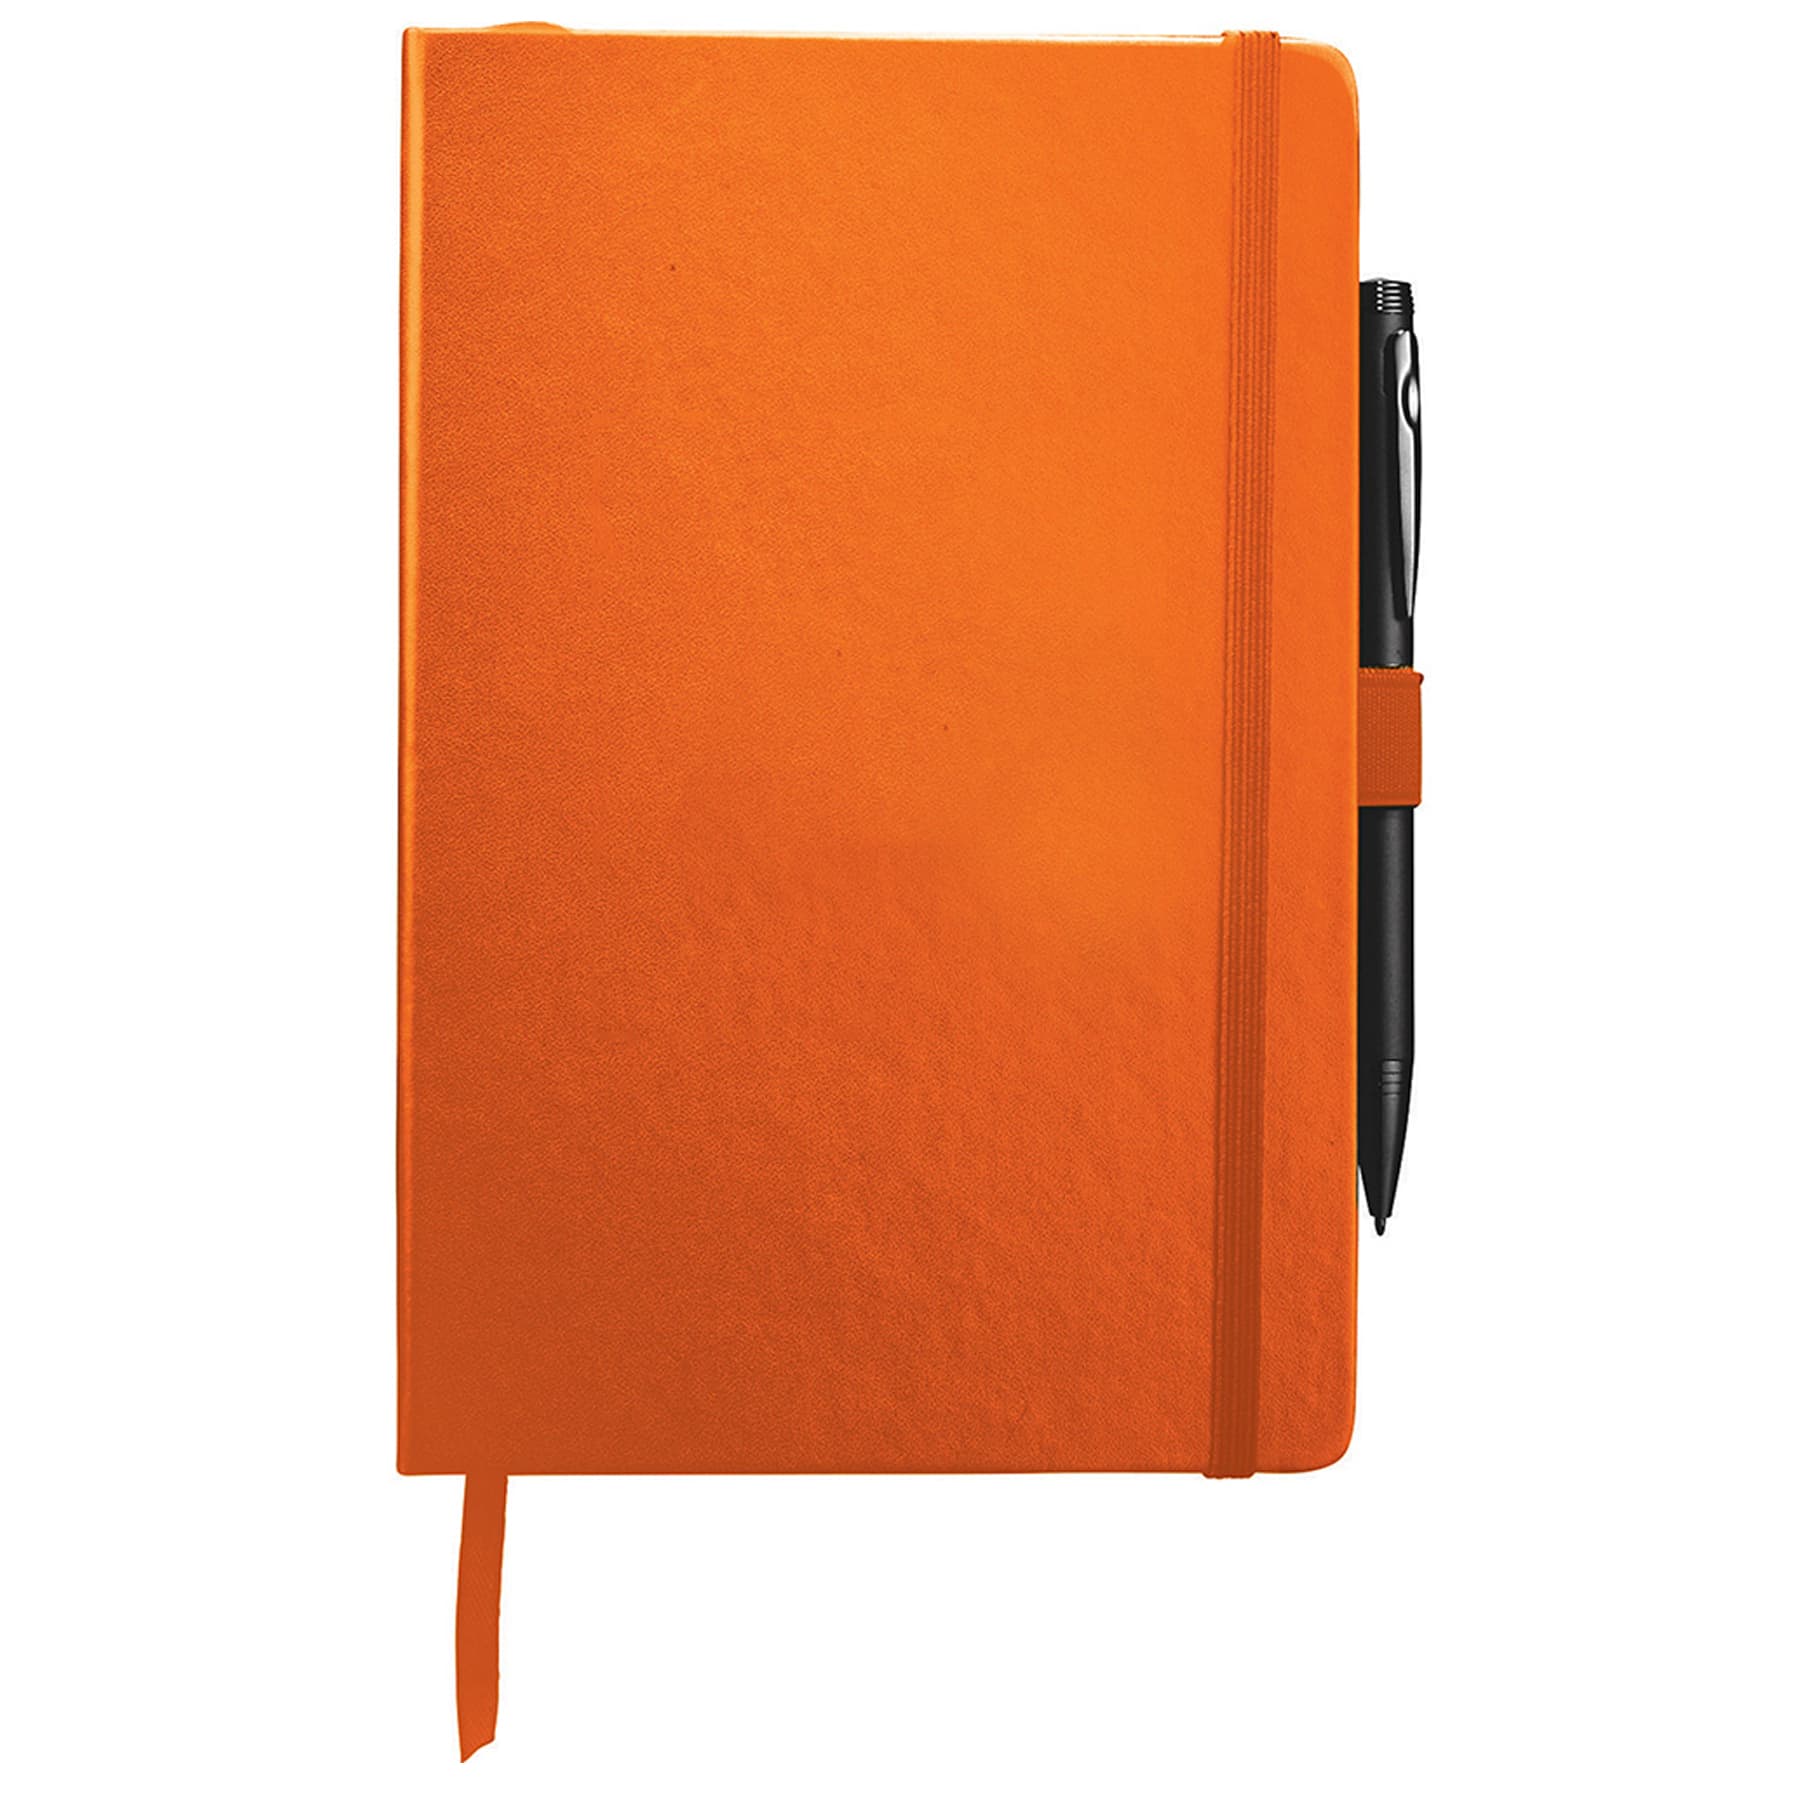 jb1008or-nova-bound-journalbook-orange-front-3.jpg